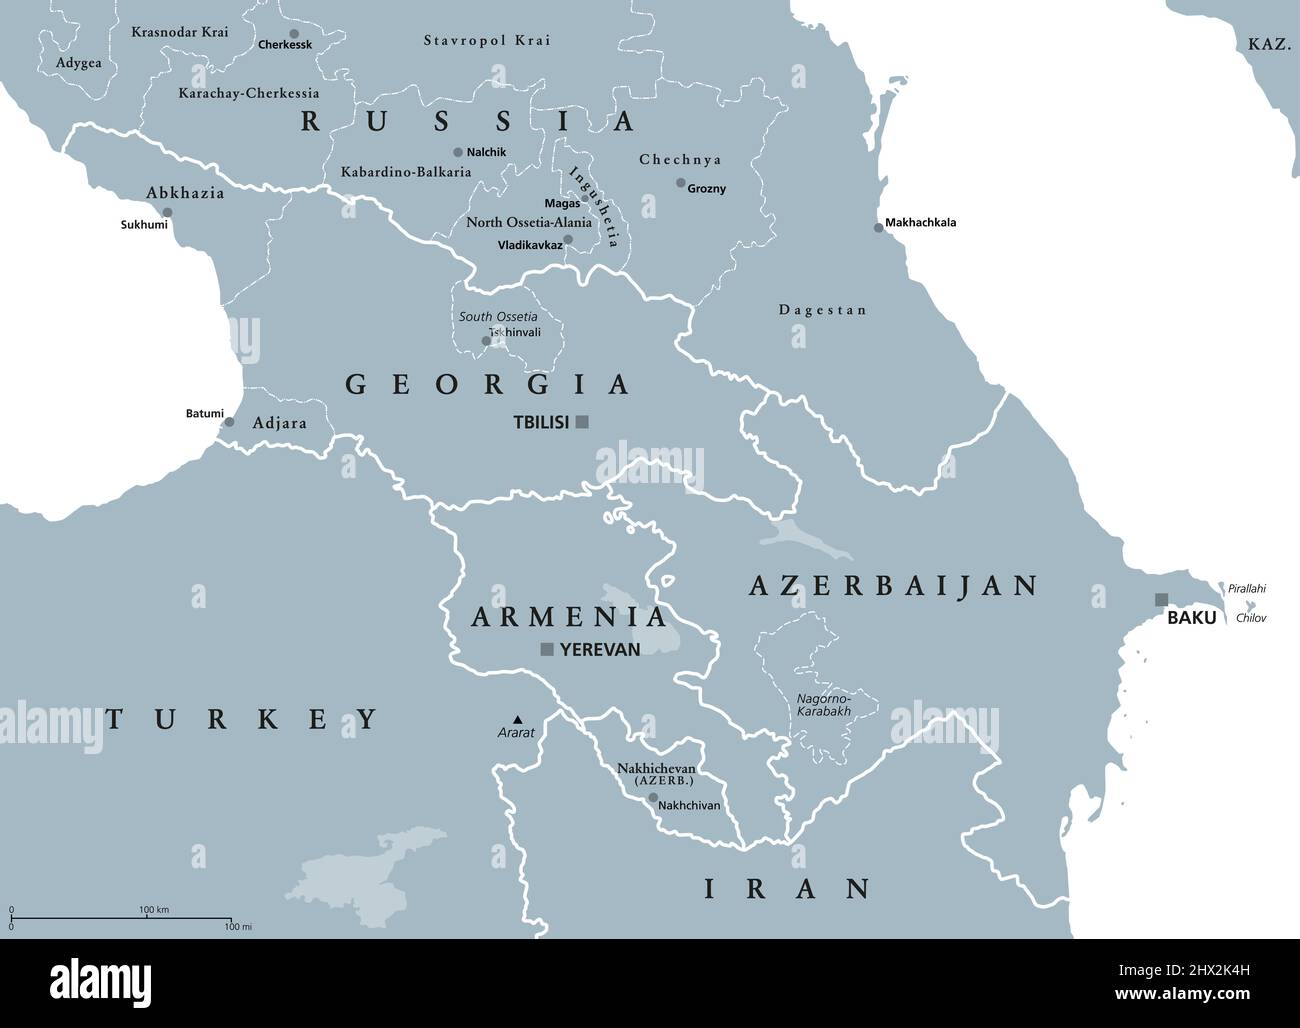 Caucasus, Caucasia, gray political map. Region between the Black Sea and the Caspian Sea, mainly occupied by Armenia, Azerbaijan, Georgia, and Russia. Stock Photo